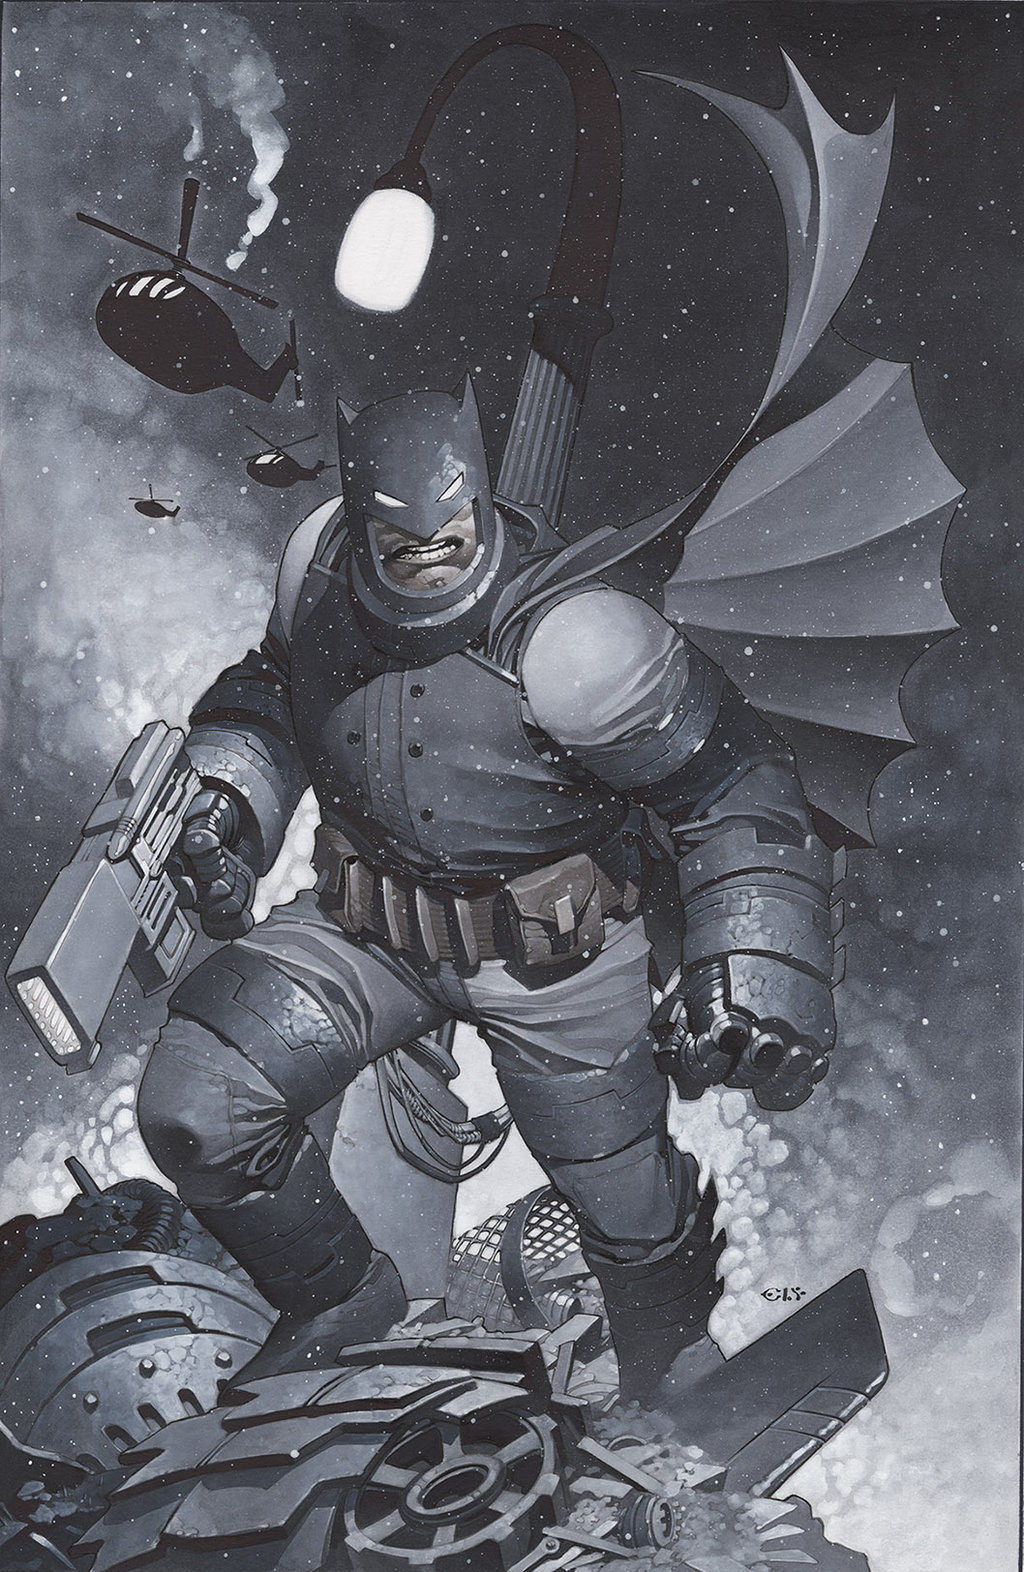 Dark Knight Returns by Chris Stevens